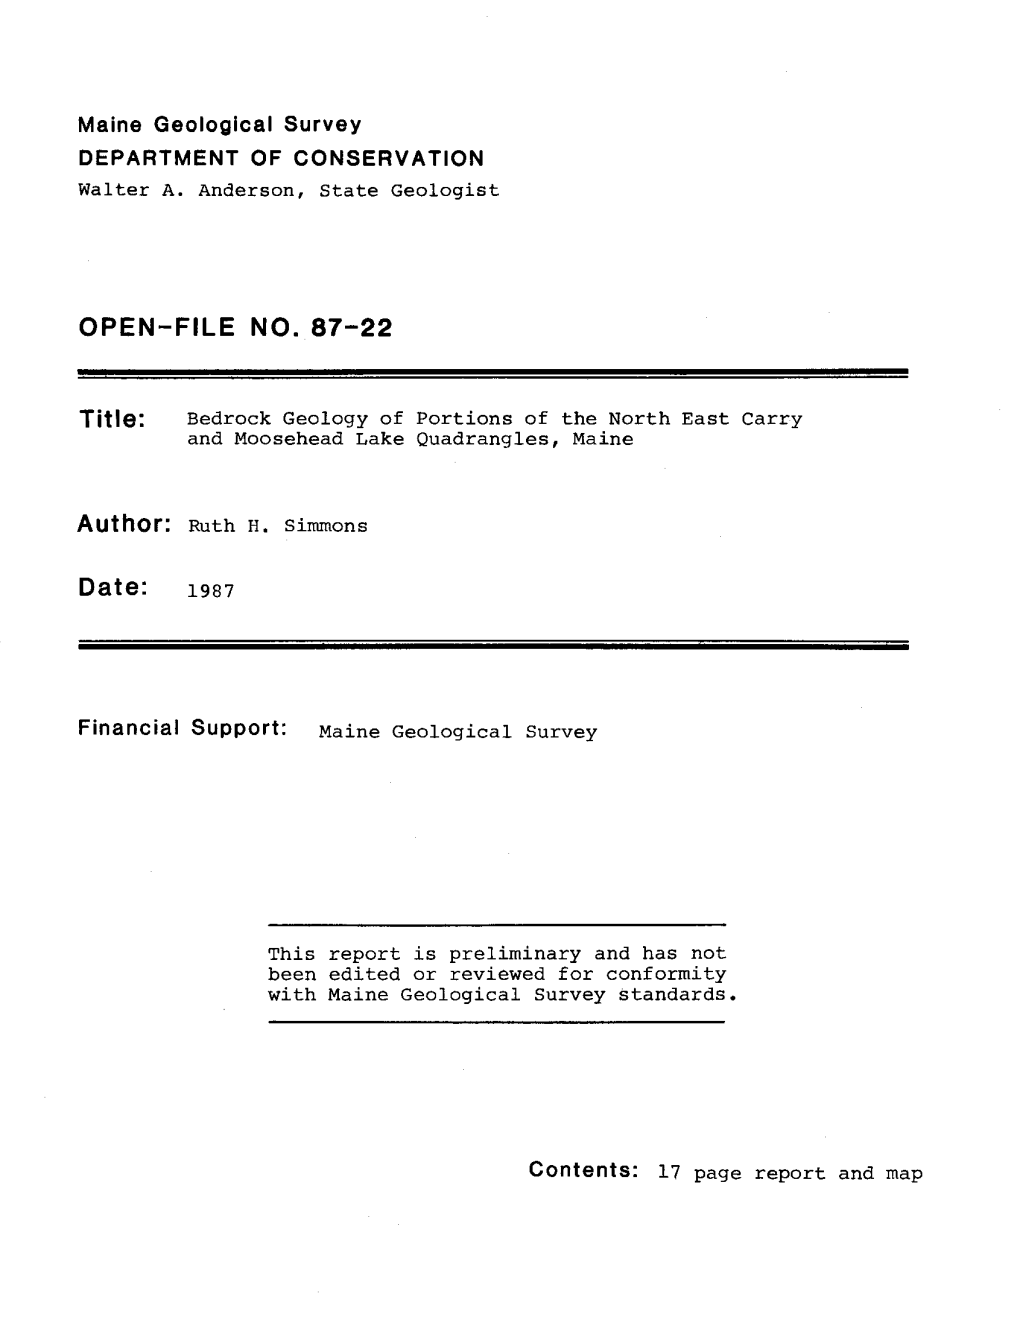 Open-File No. 87-22